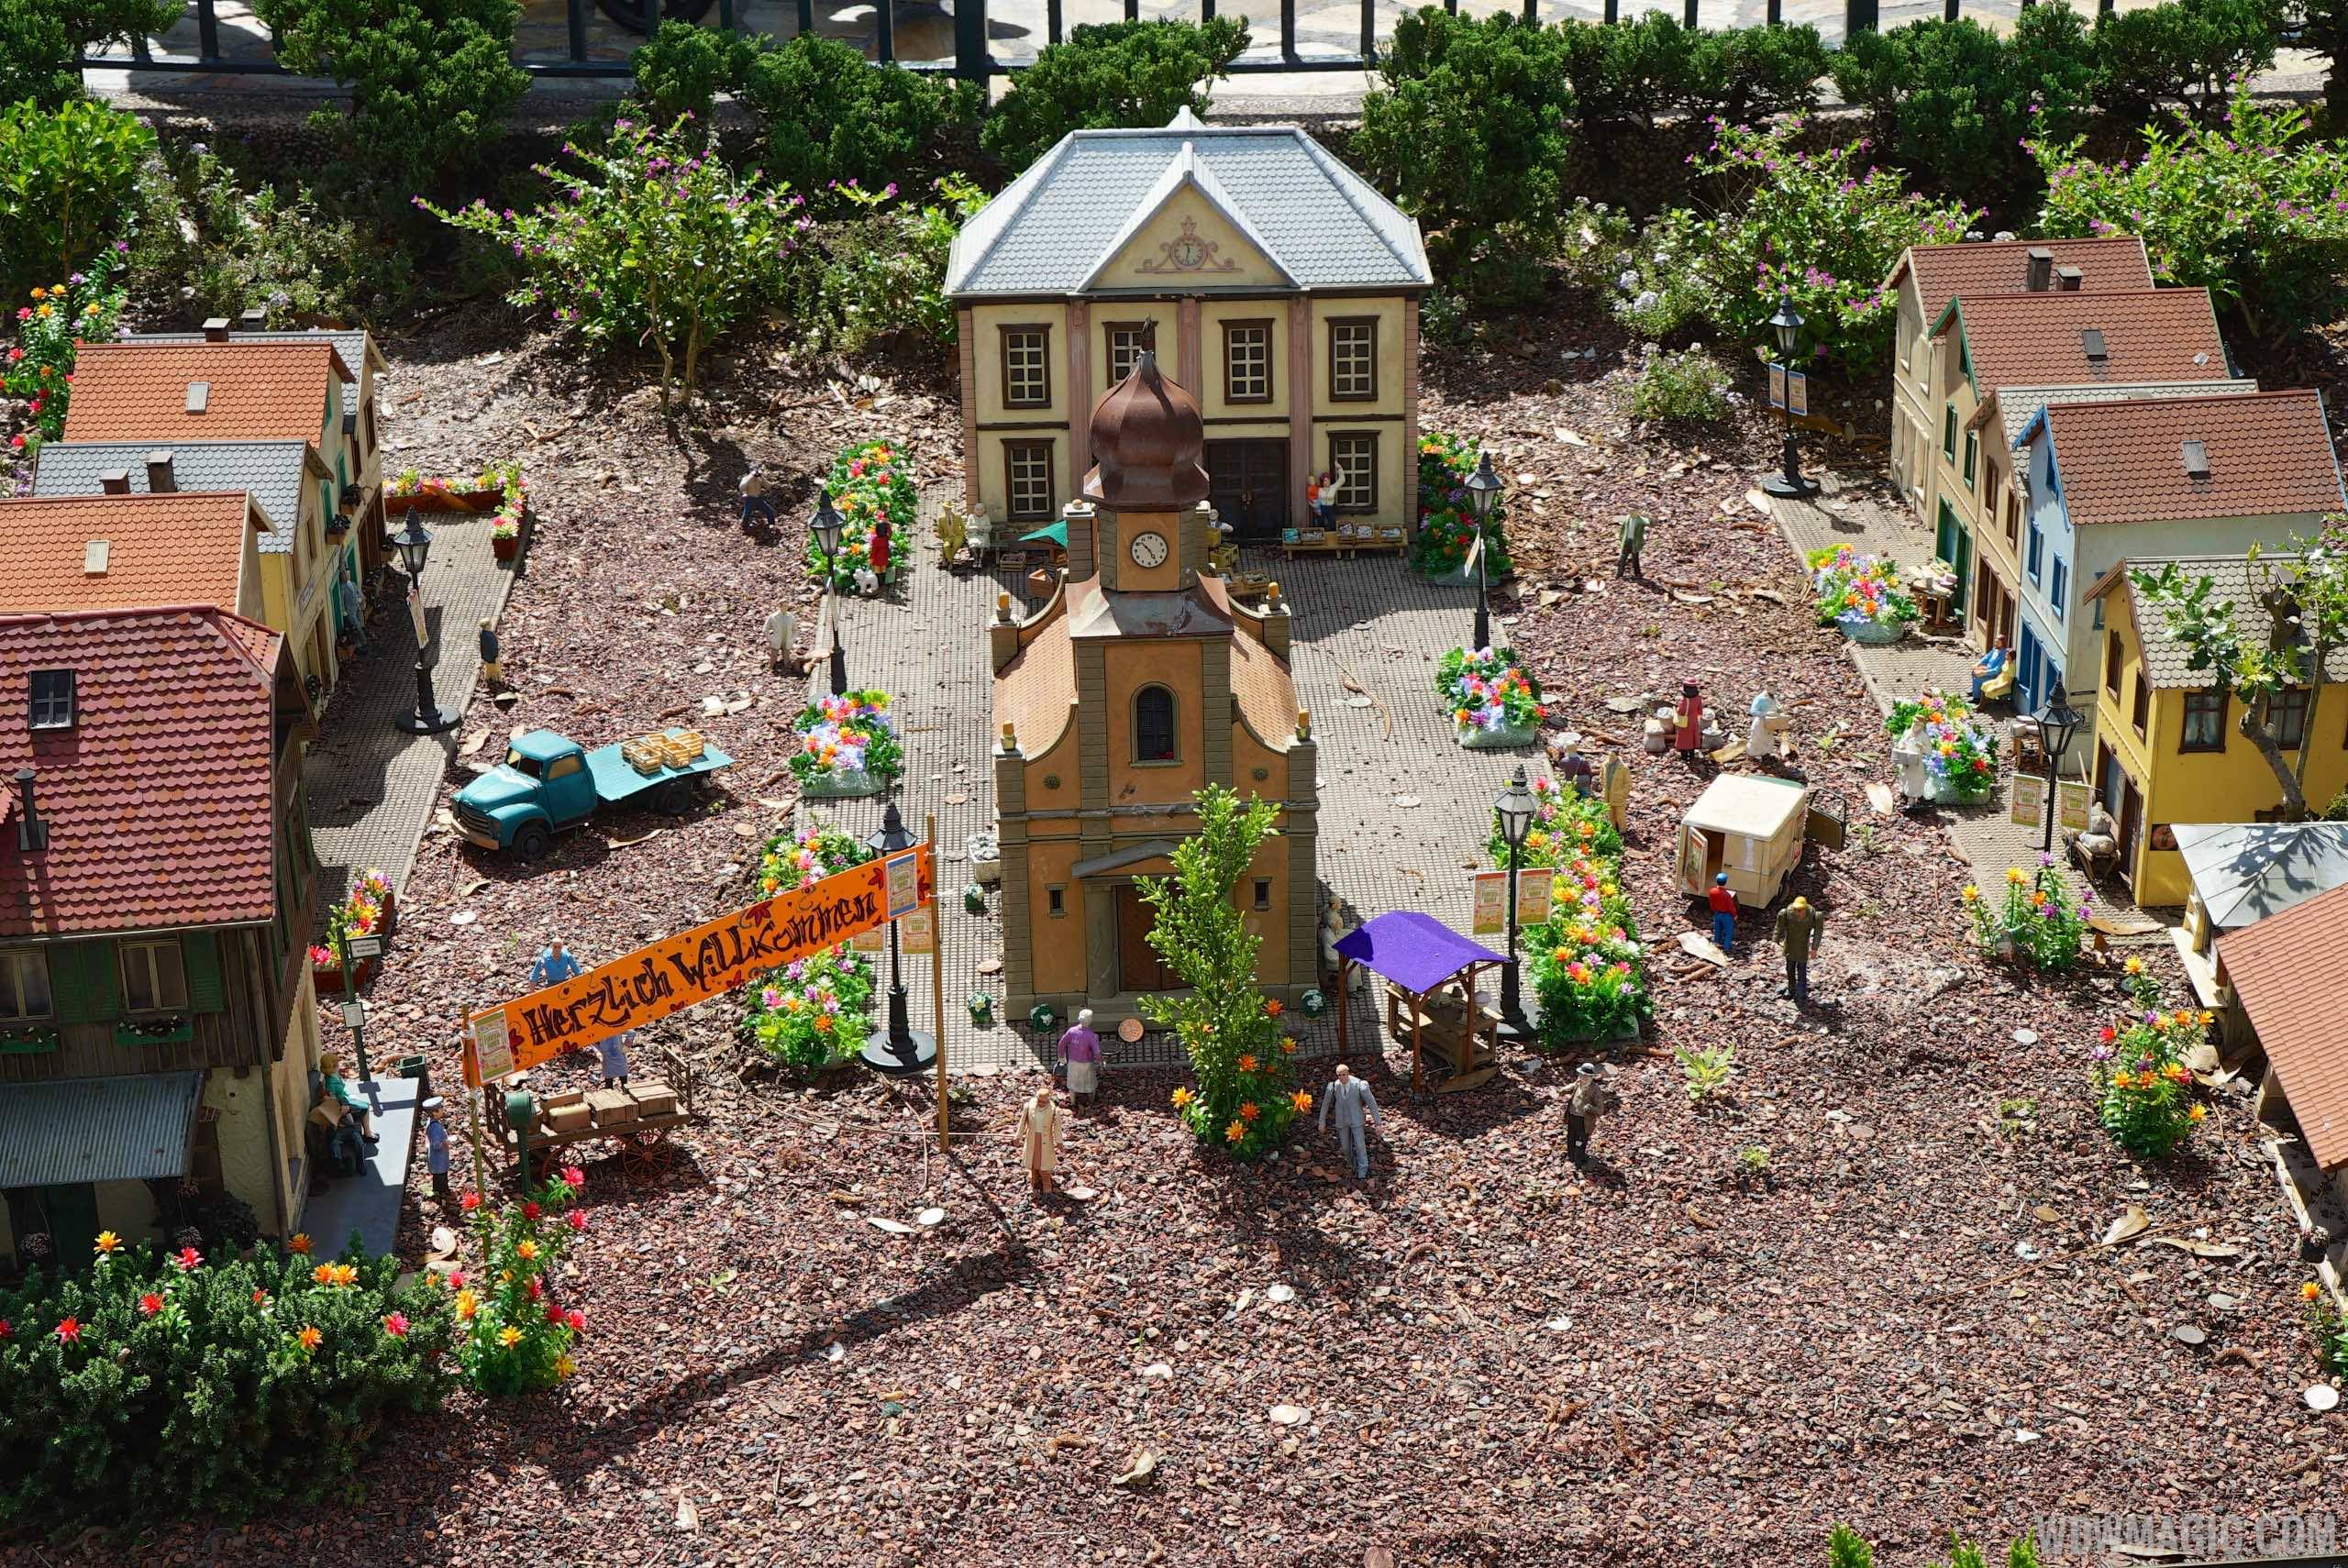 2015 Epcot Flower and Garden Festival - Model railroad